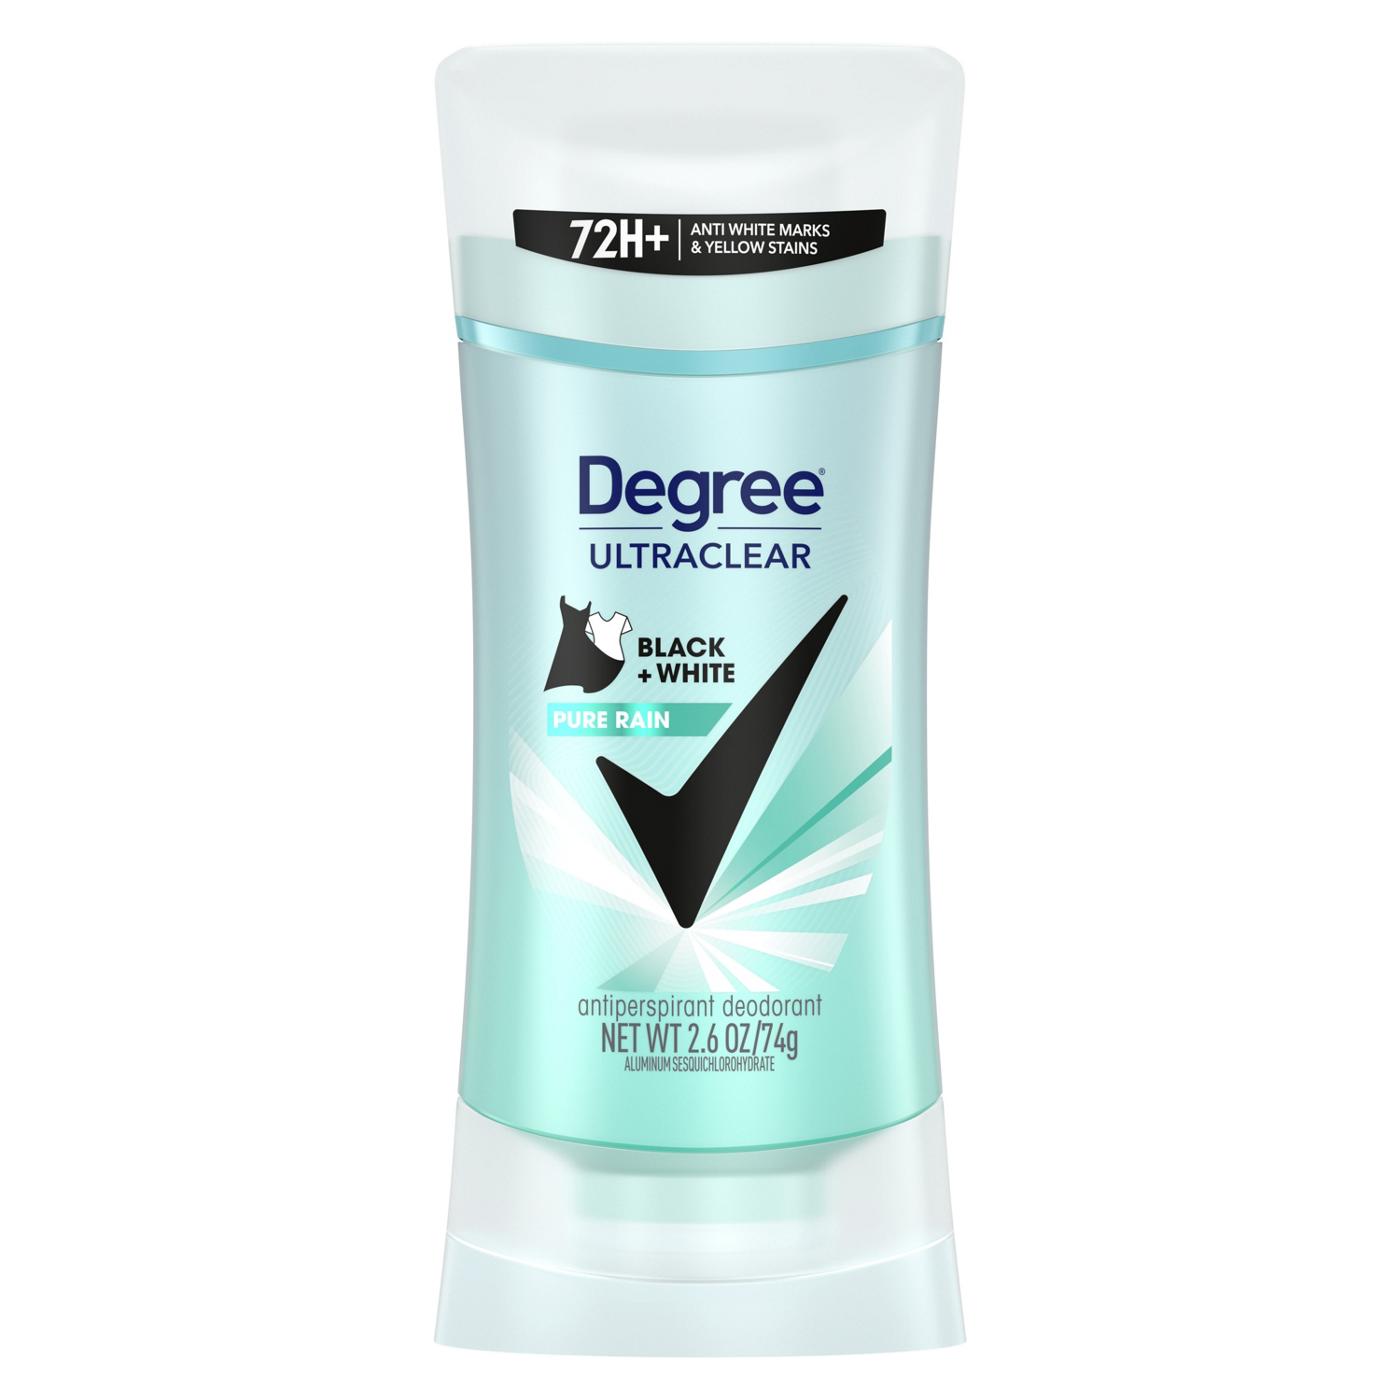 Degree UltraClear Antiperspirant Deodorant Twin Pack - Pure Rain; image 1 of 3